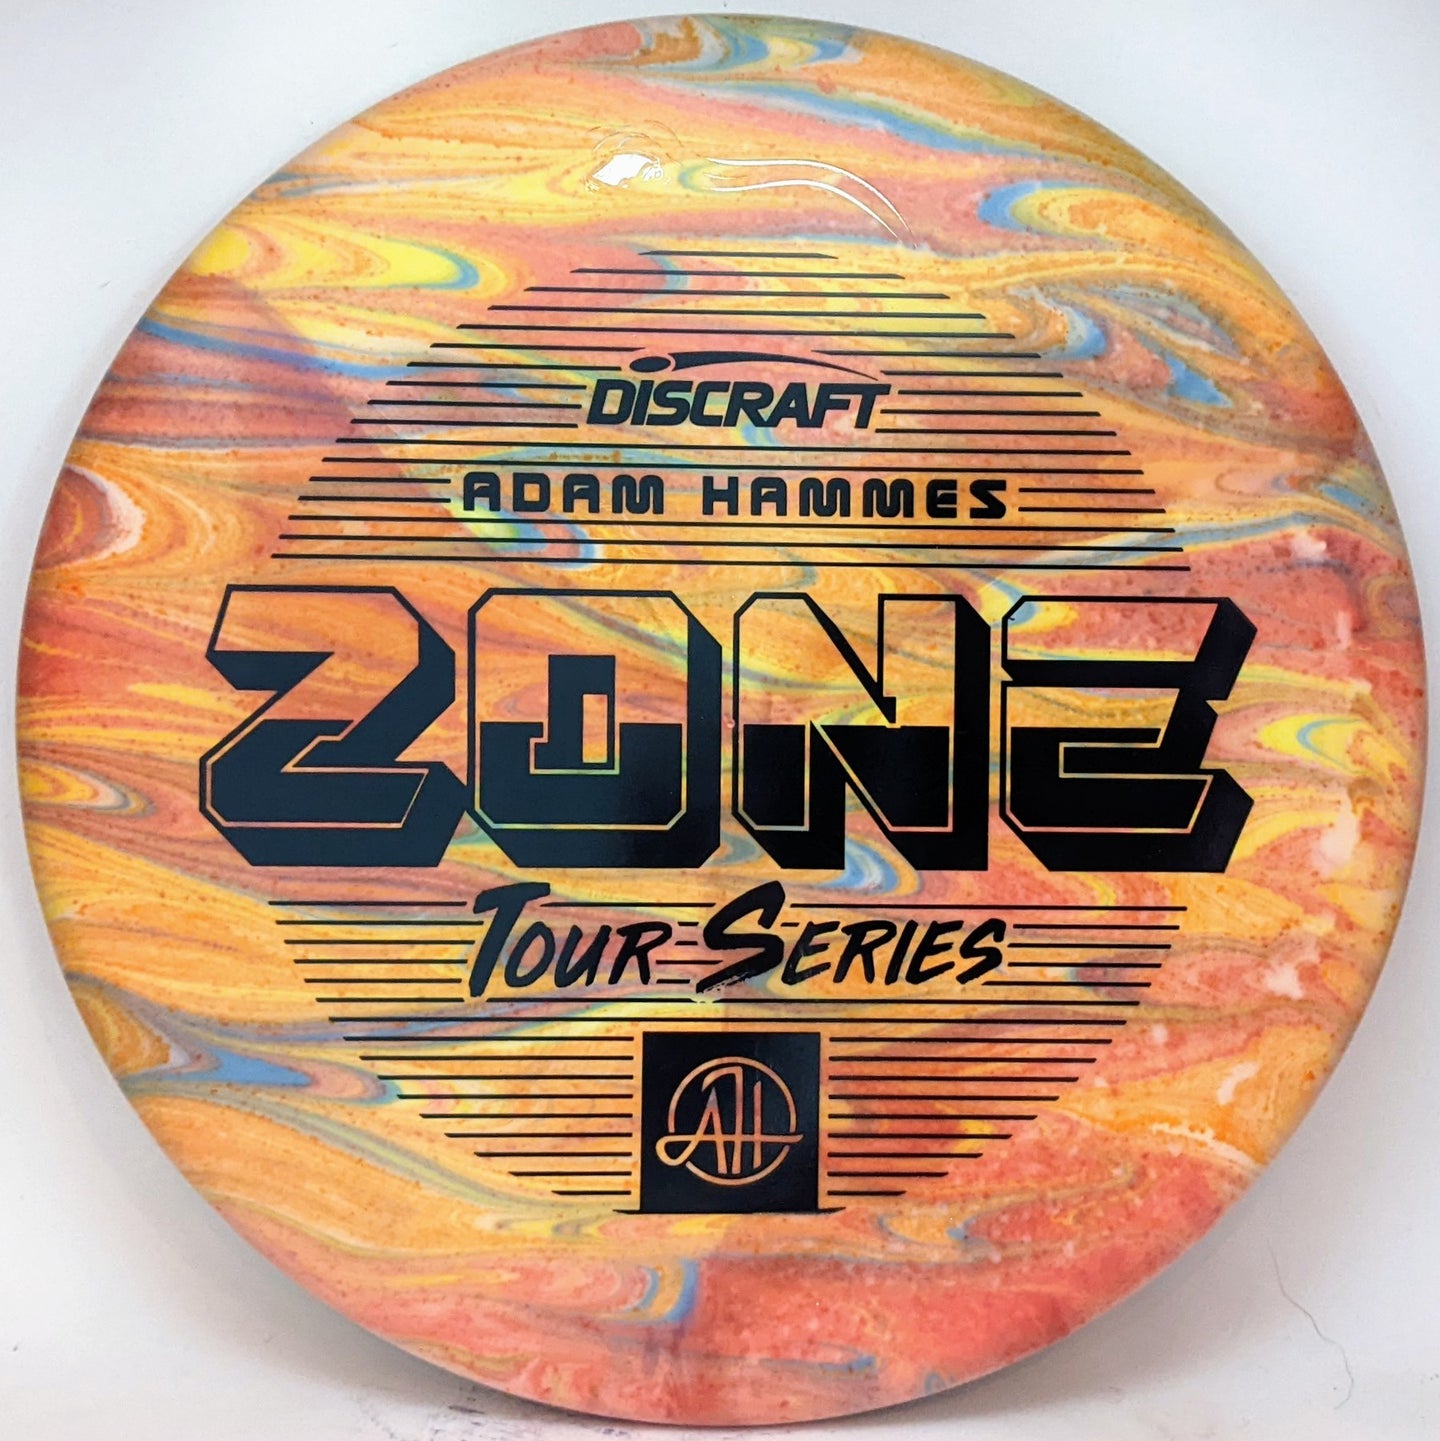 Discraft Zone, Adam Hammes Tour Series